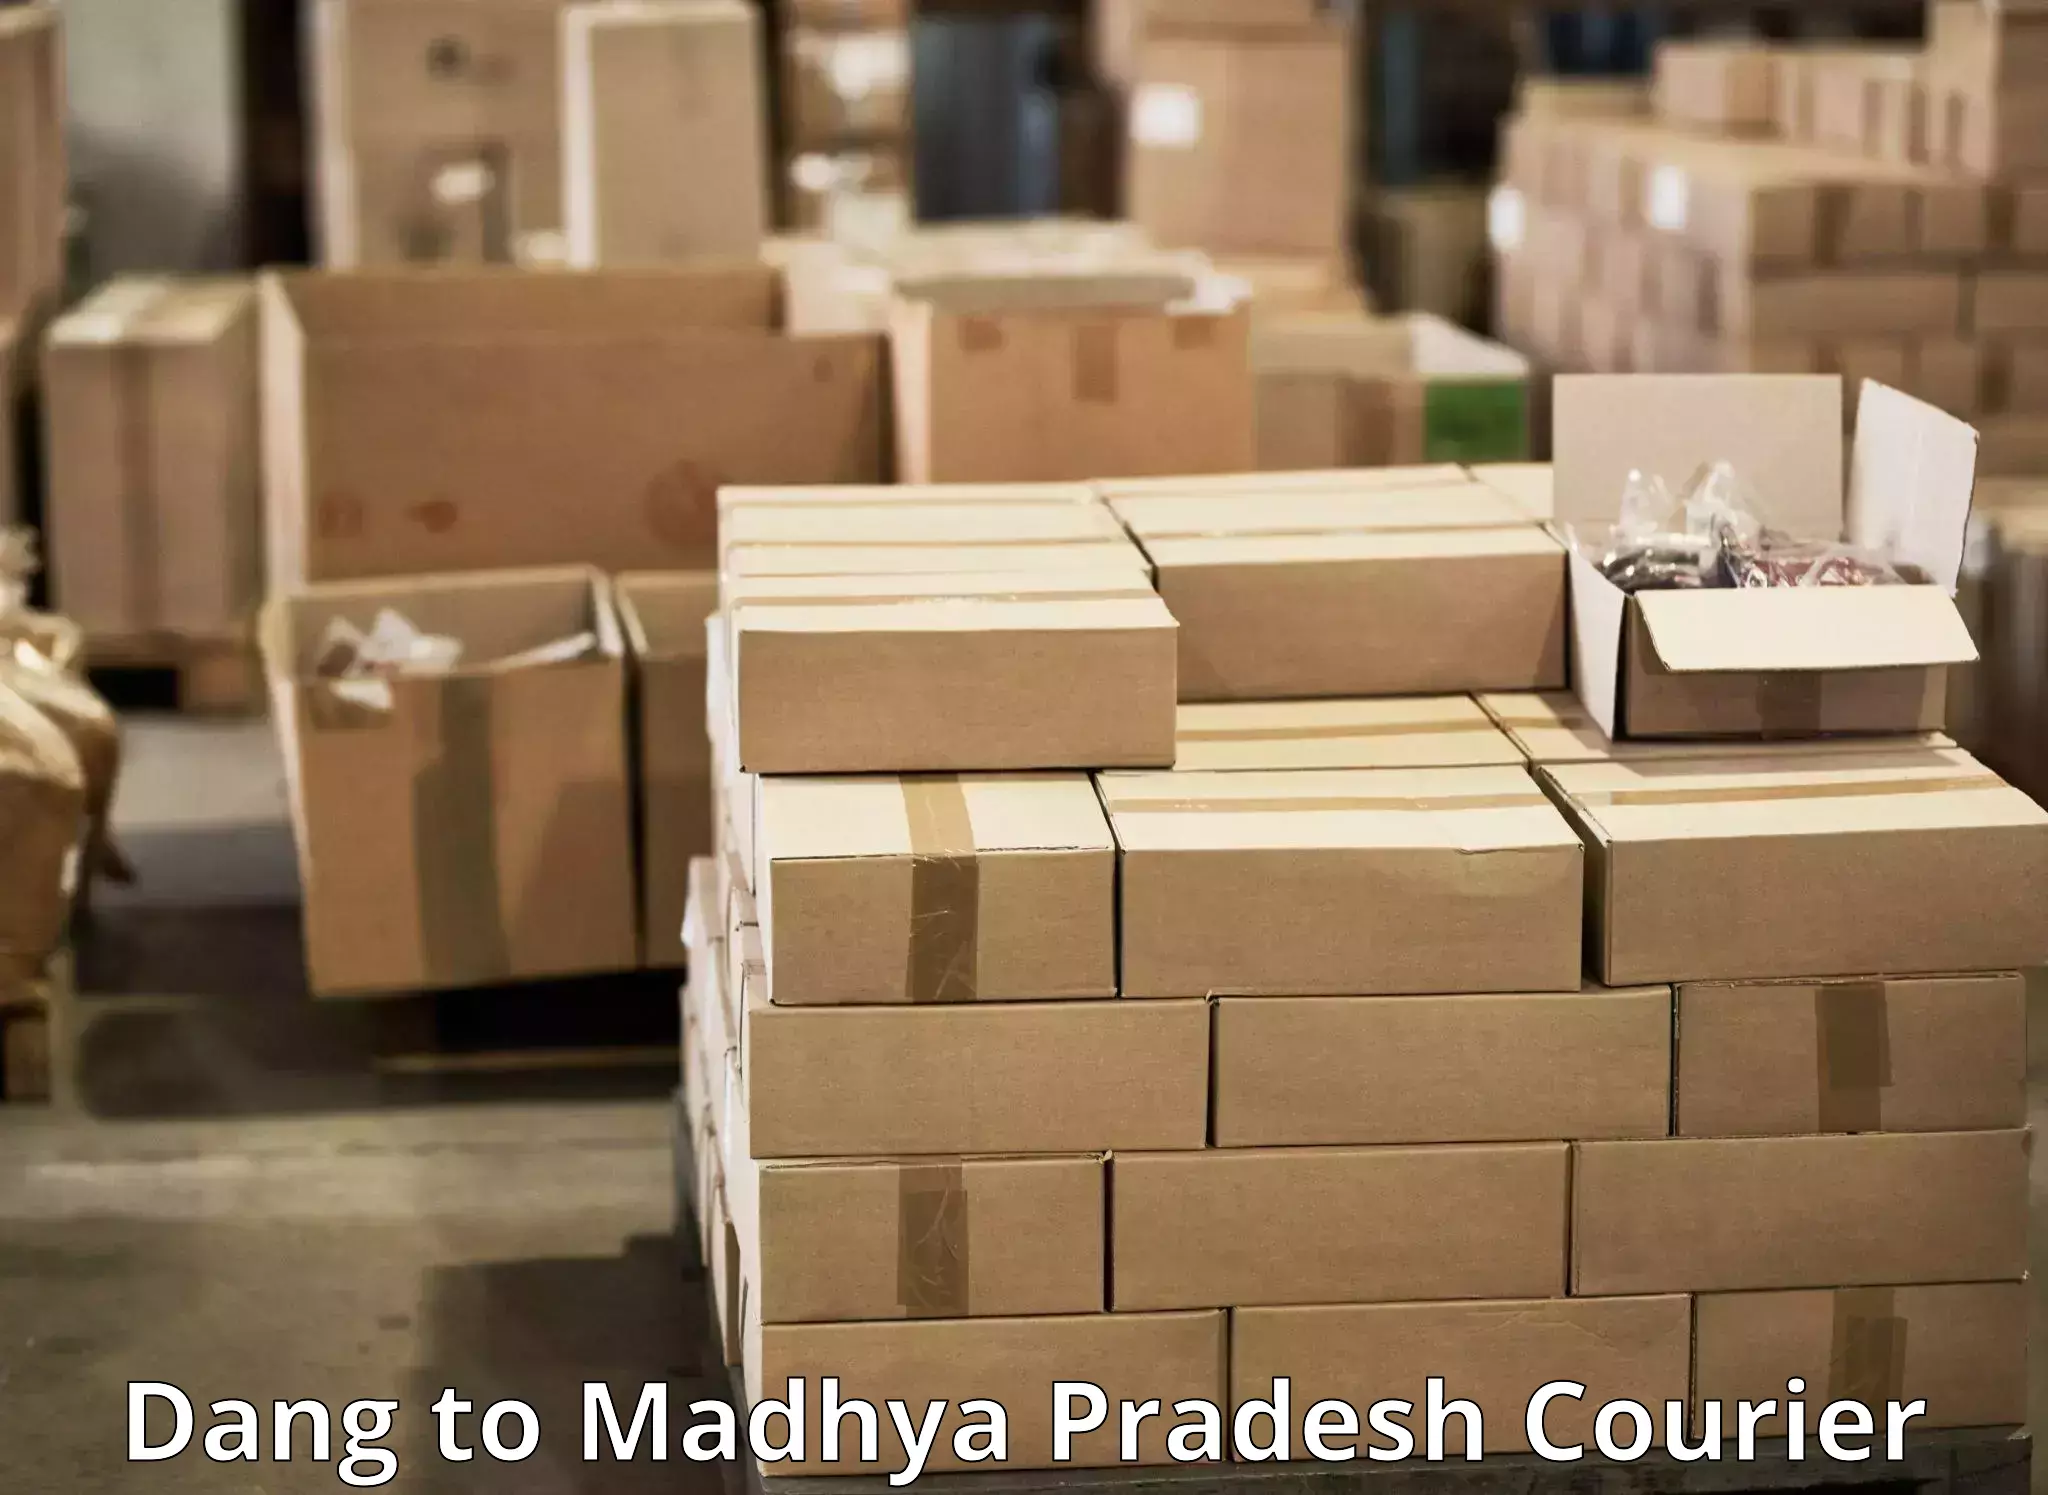 Global shipping networks Dang to Madhya Pradesh